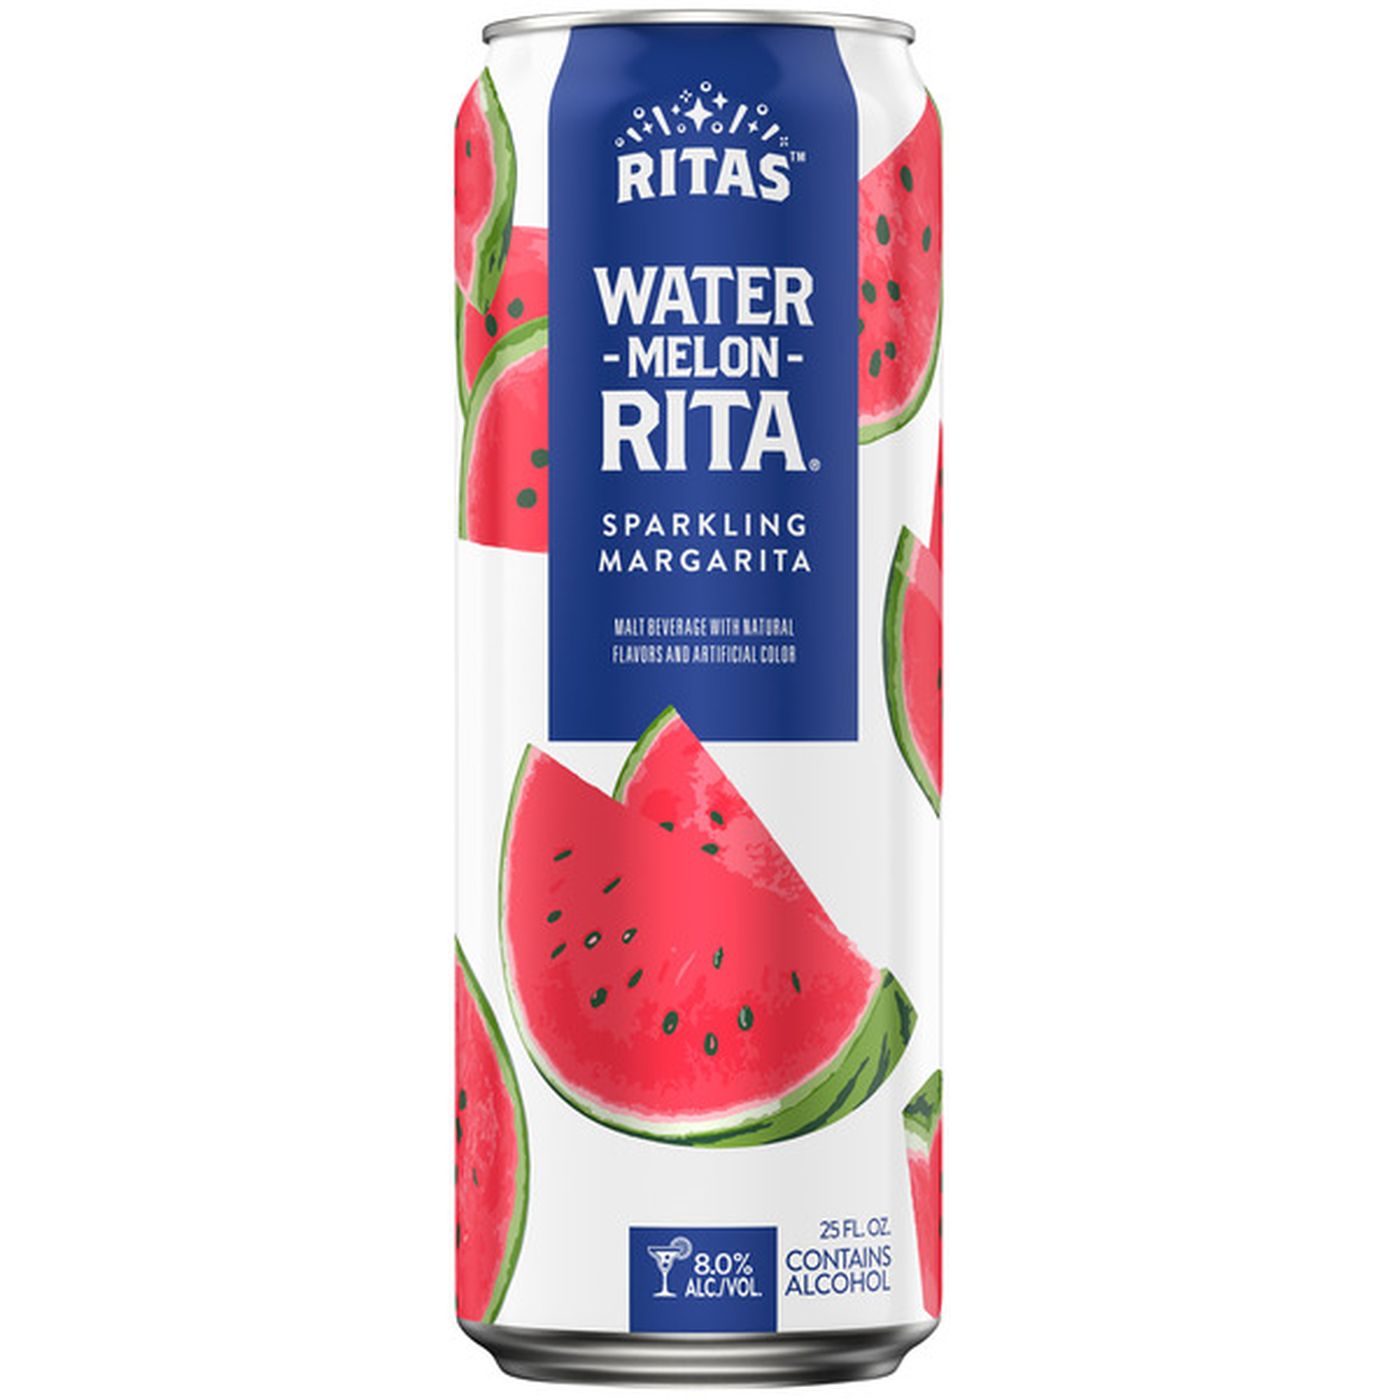 Ritas Water-Melon-Rita Watermelon Sparkling Margarita Malt Beverage (25 ...